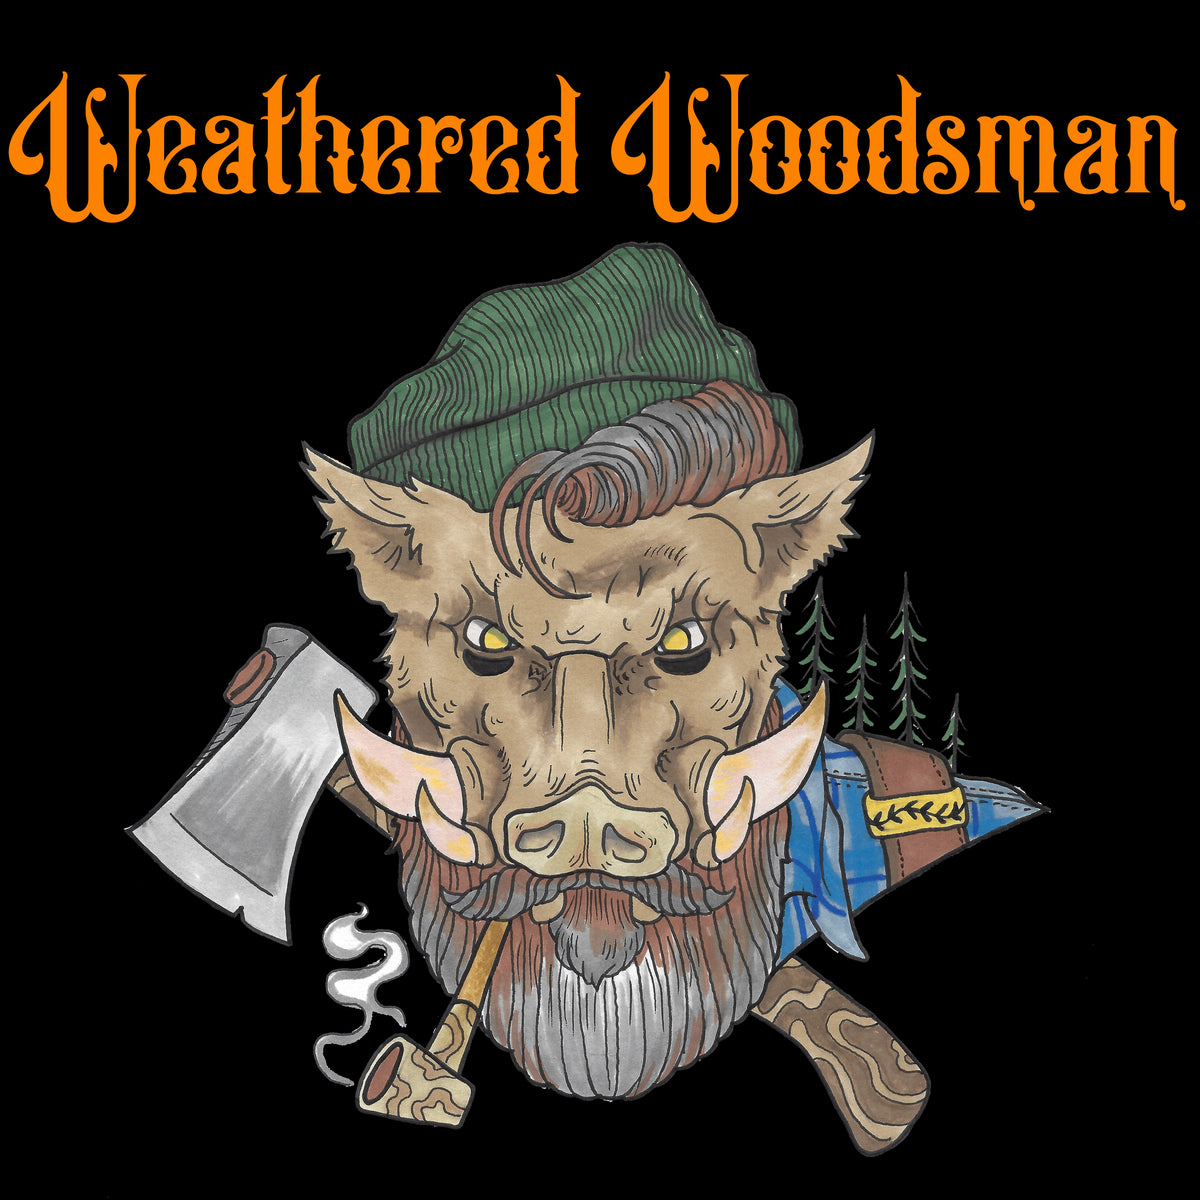 Weathered Woodsman